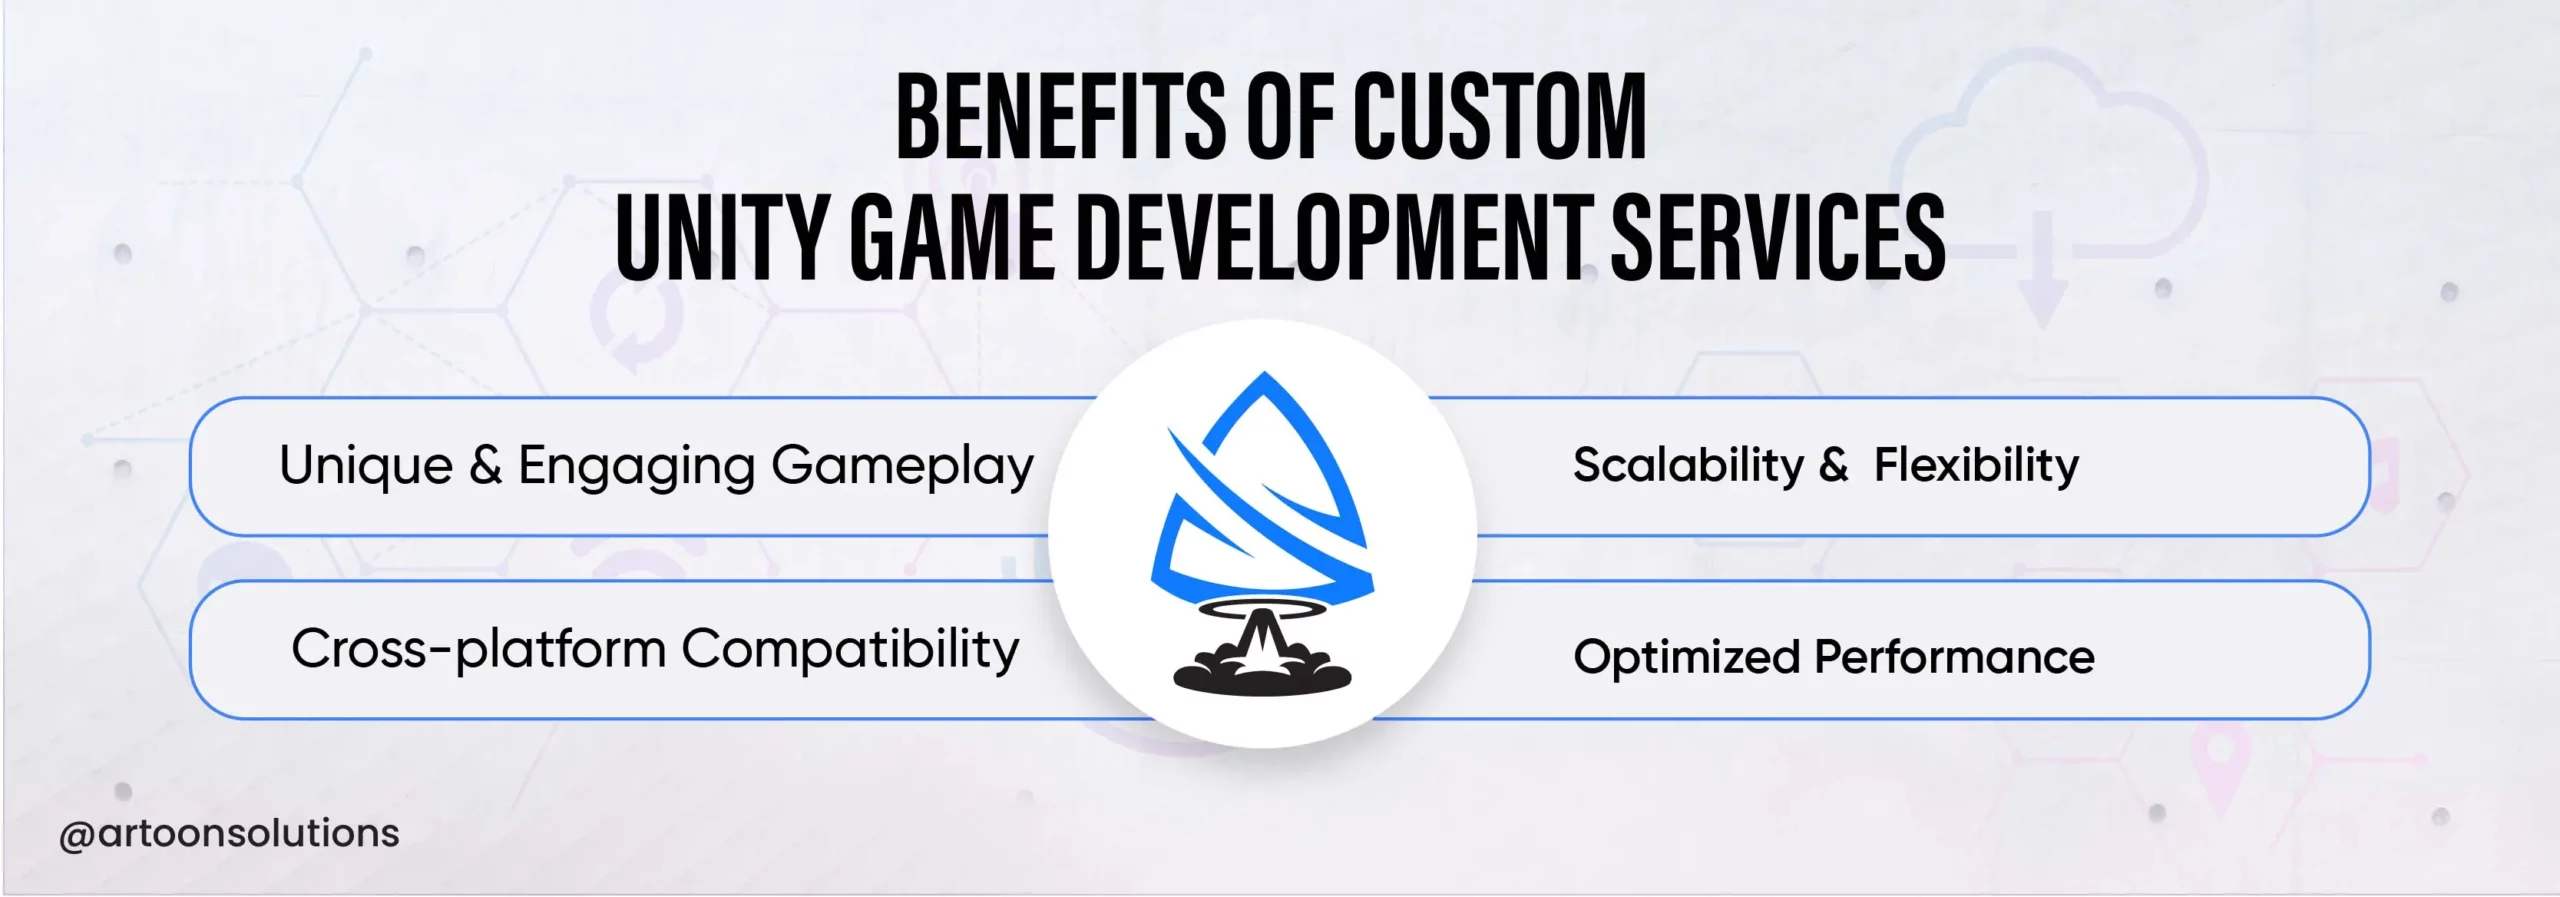 Benefits of Custom Unity Game Development Services 